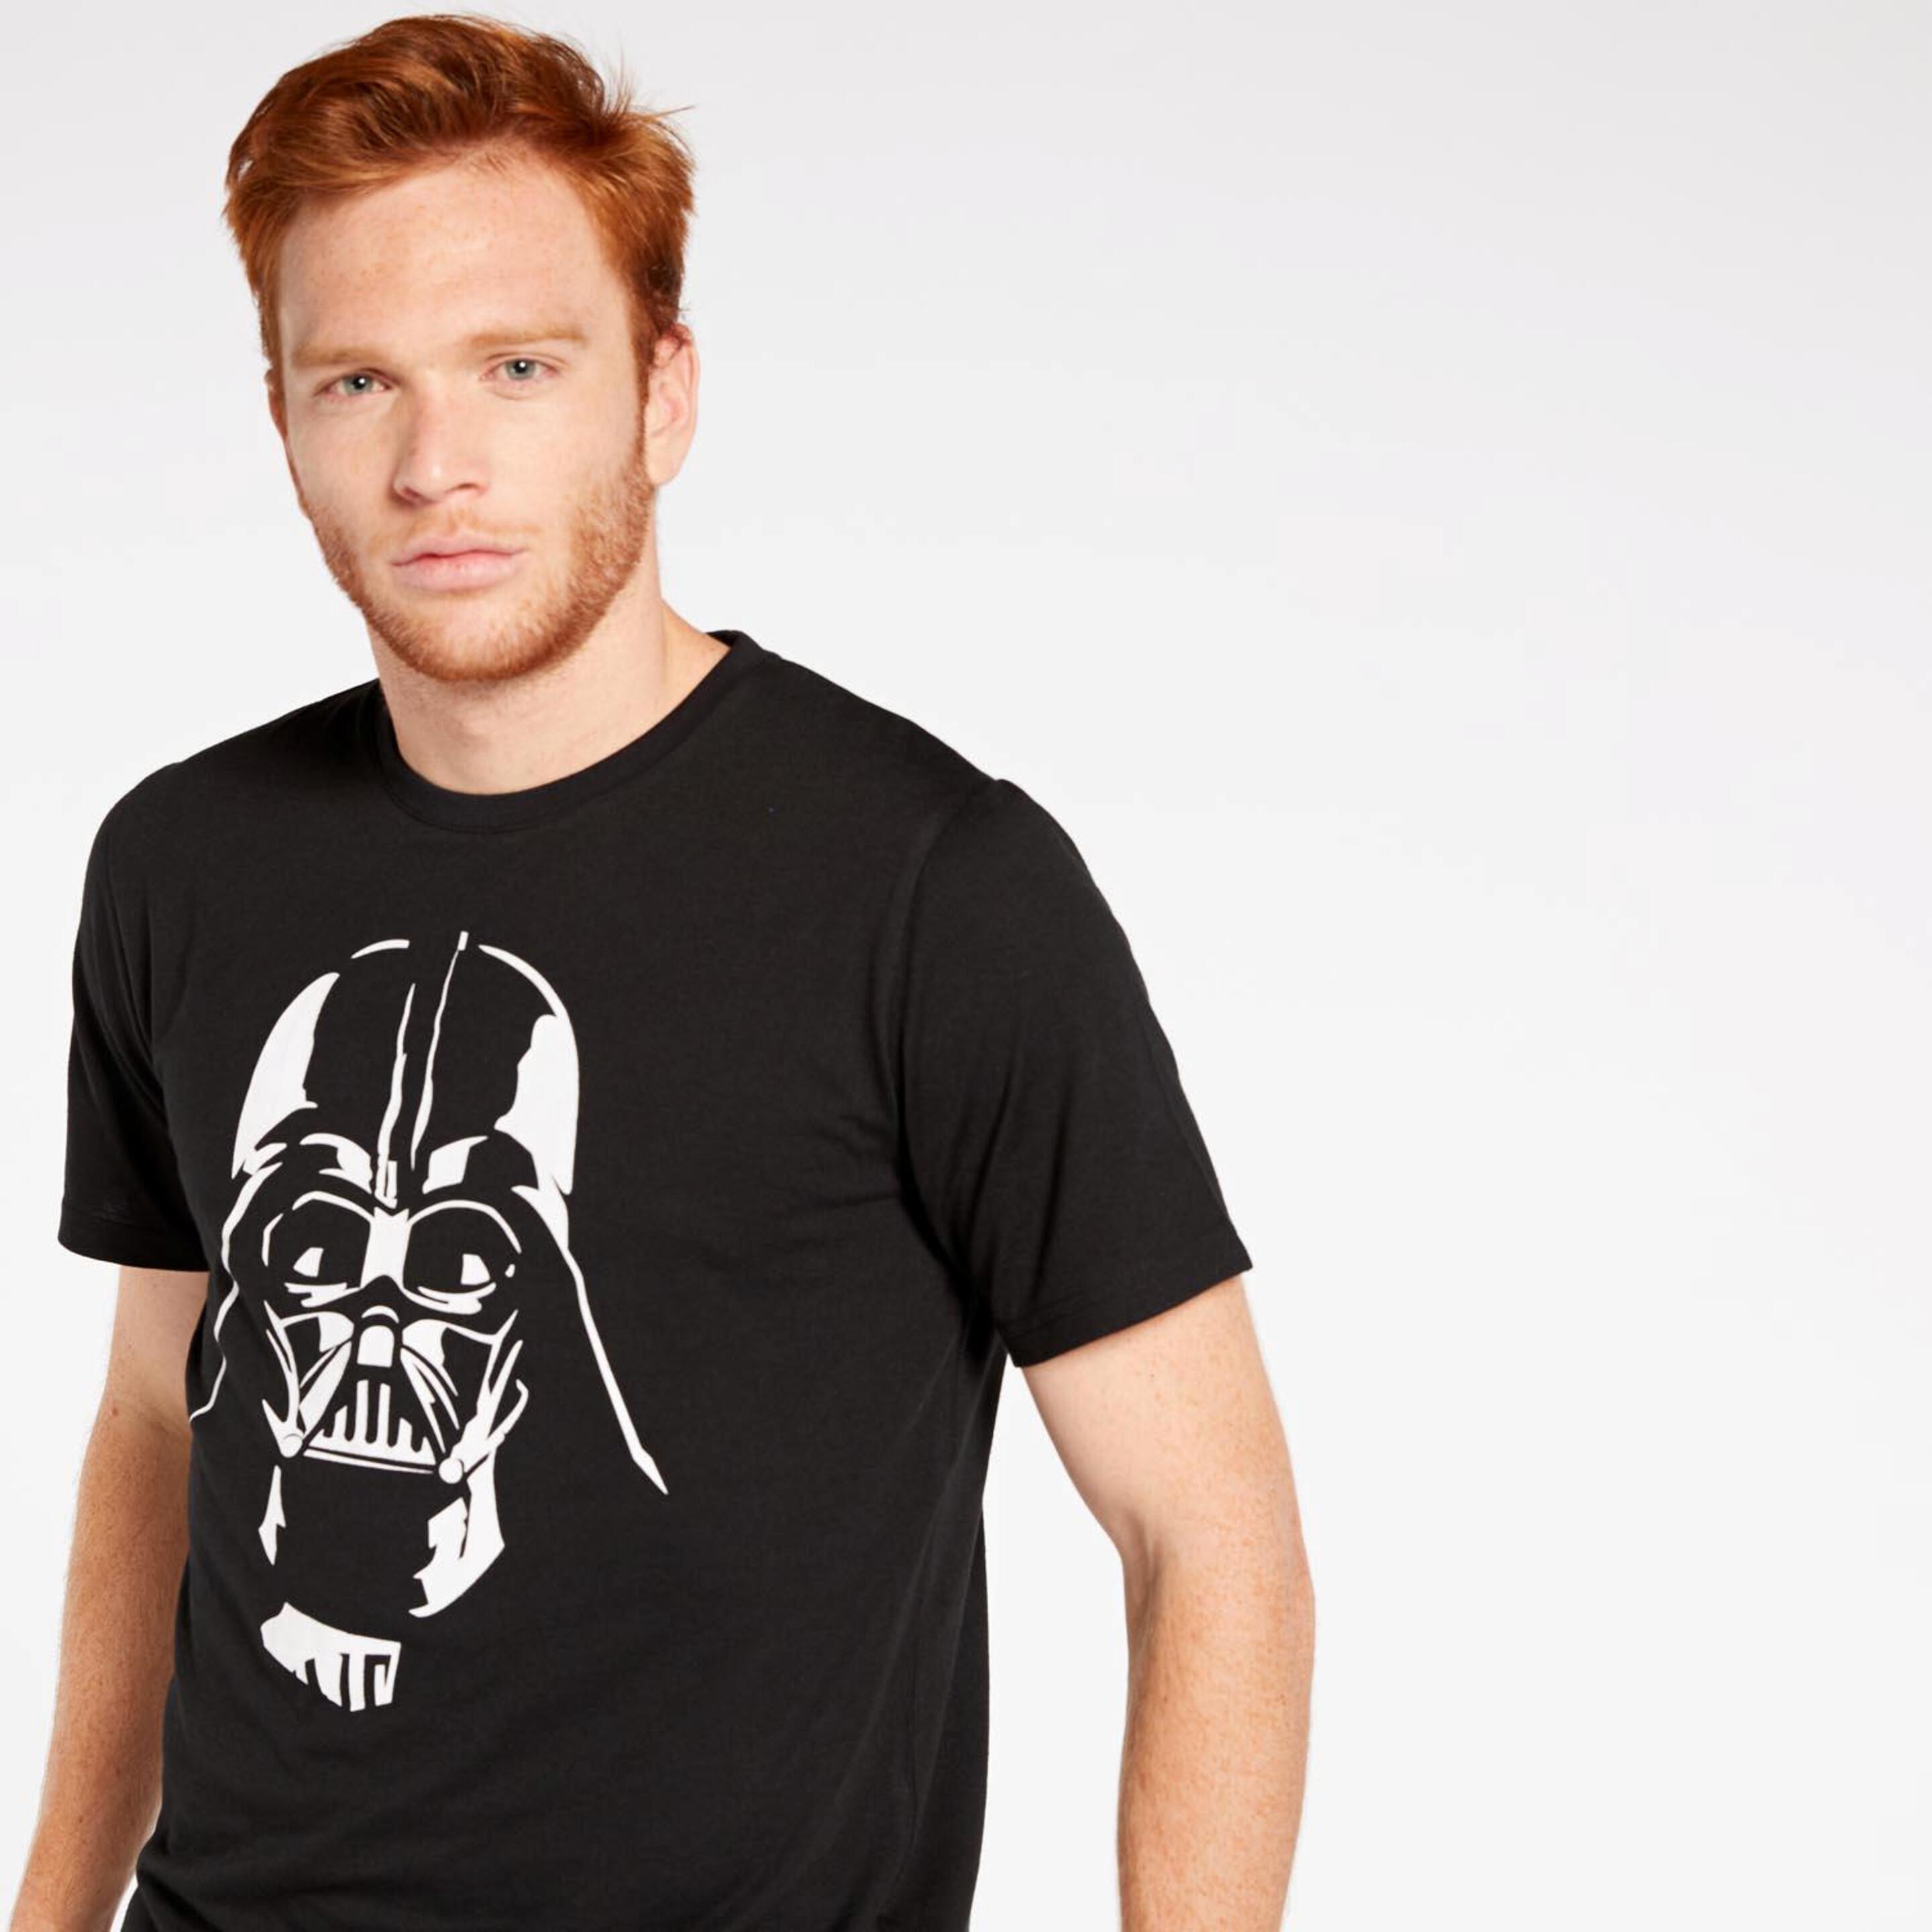 Anh Av Star Wars Cro Camiseta M/c Alg.